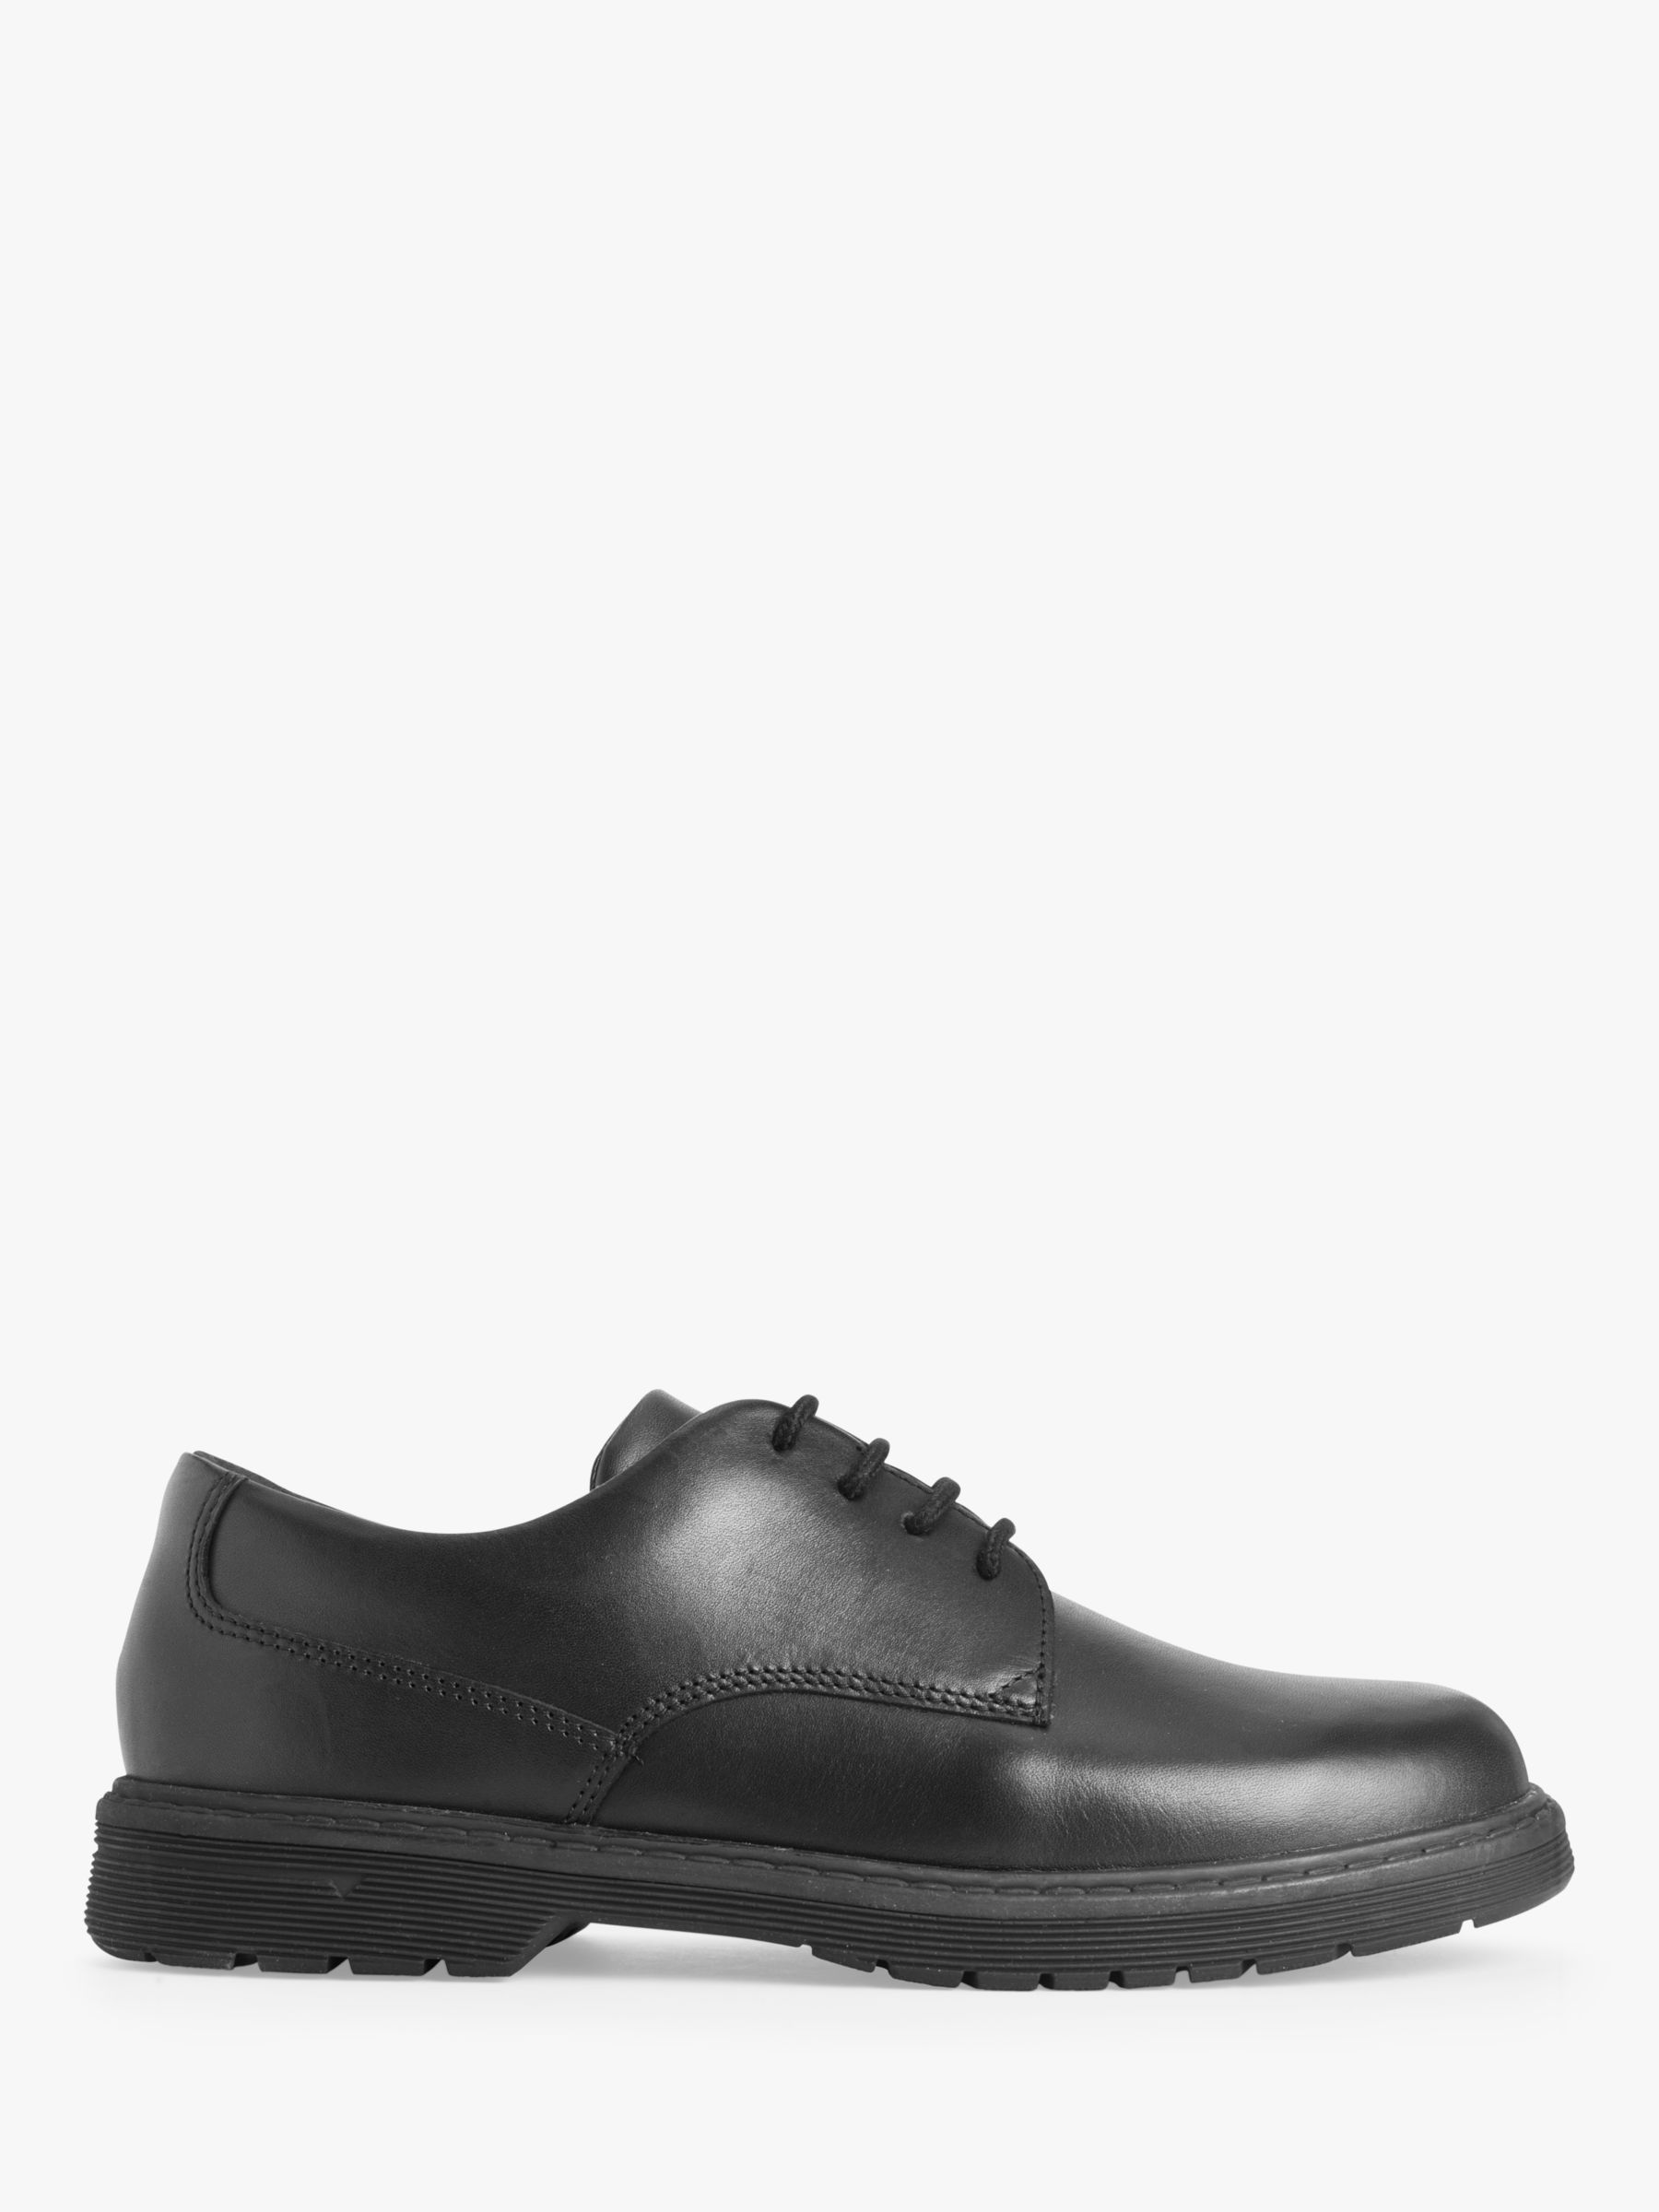 Start-Rite Kids' Glitch Leather School Shoes, Black, 3F